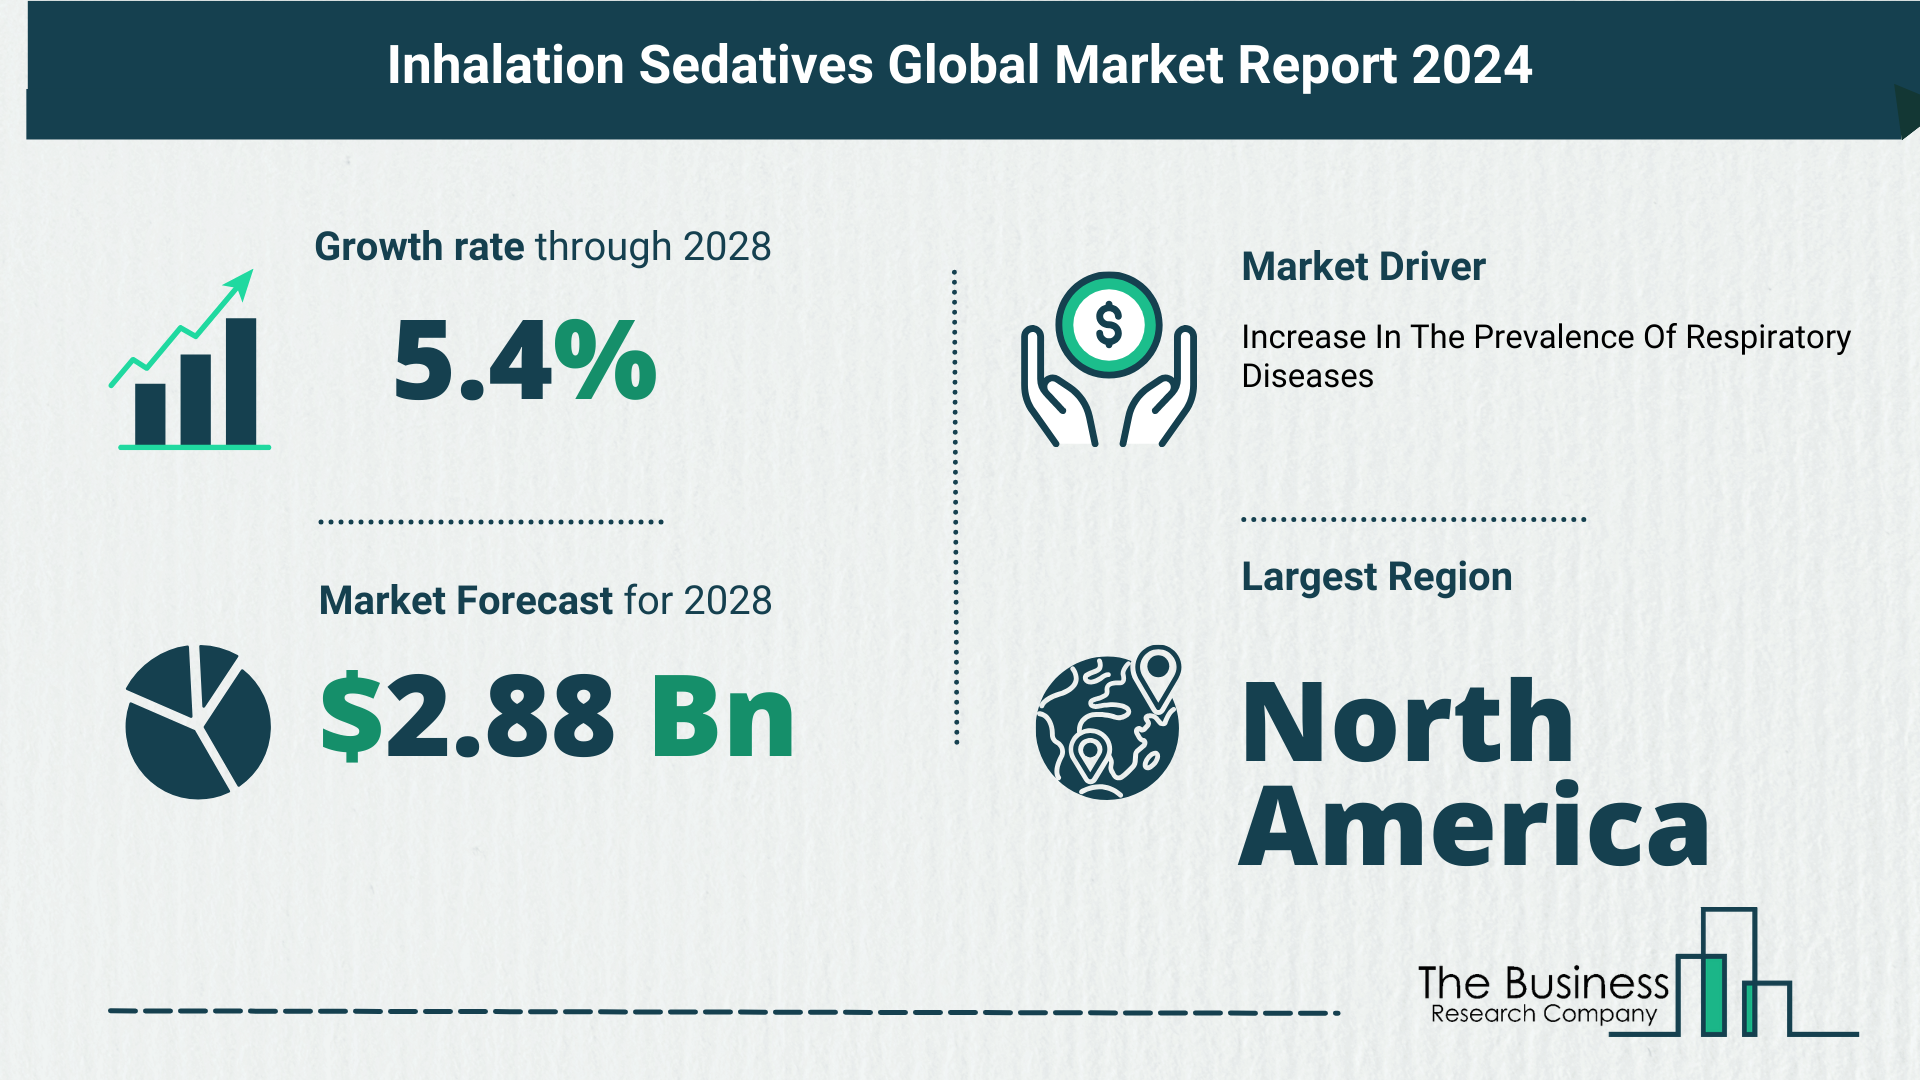 Global Inhalation Sedatives Market